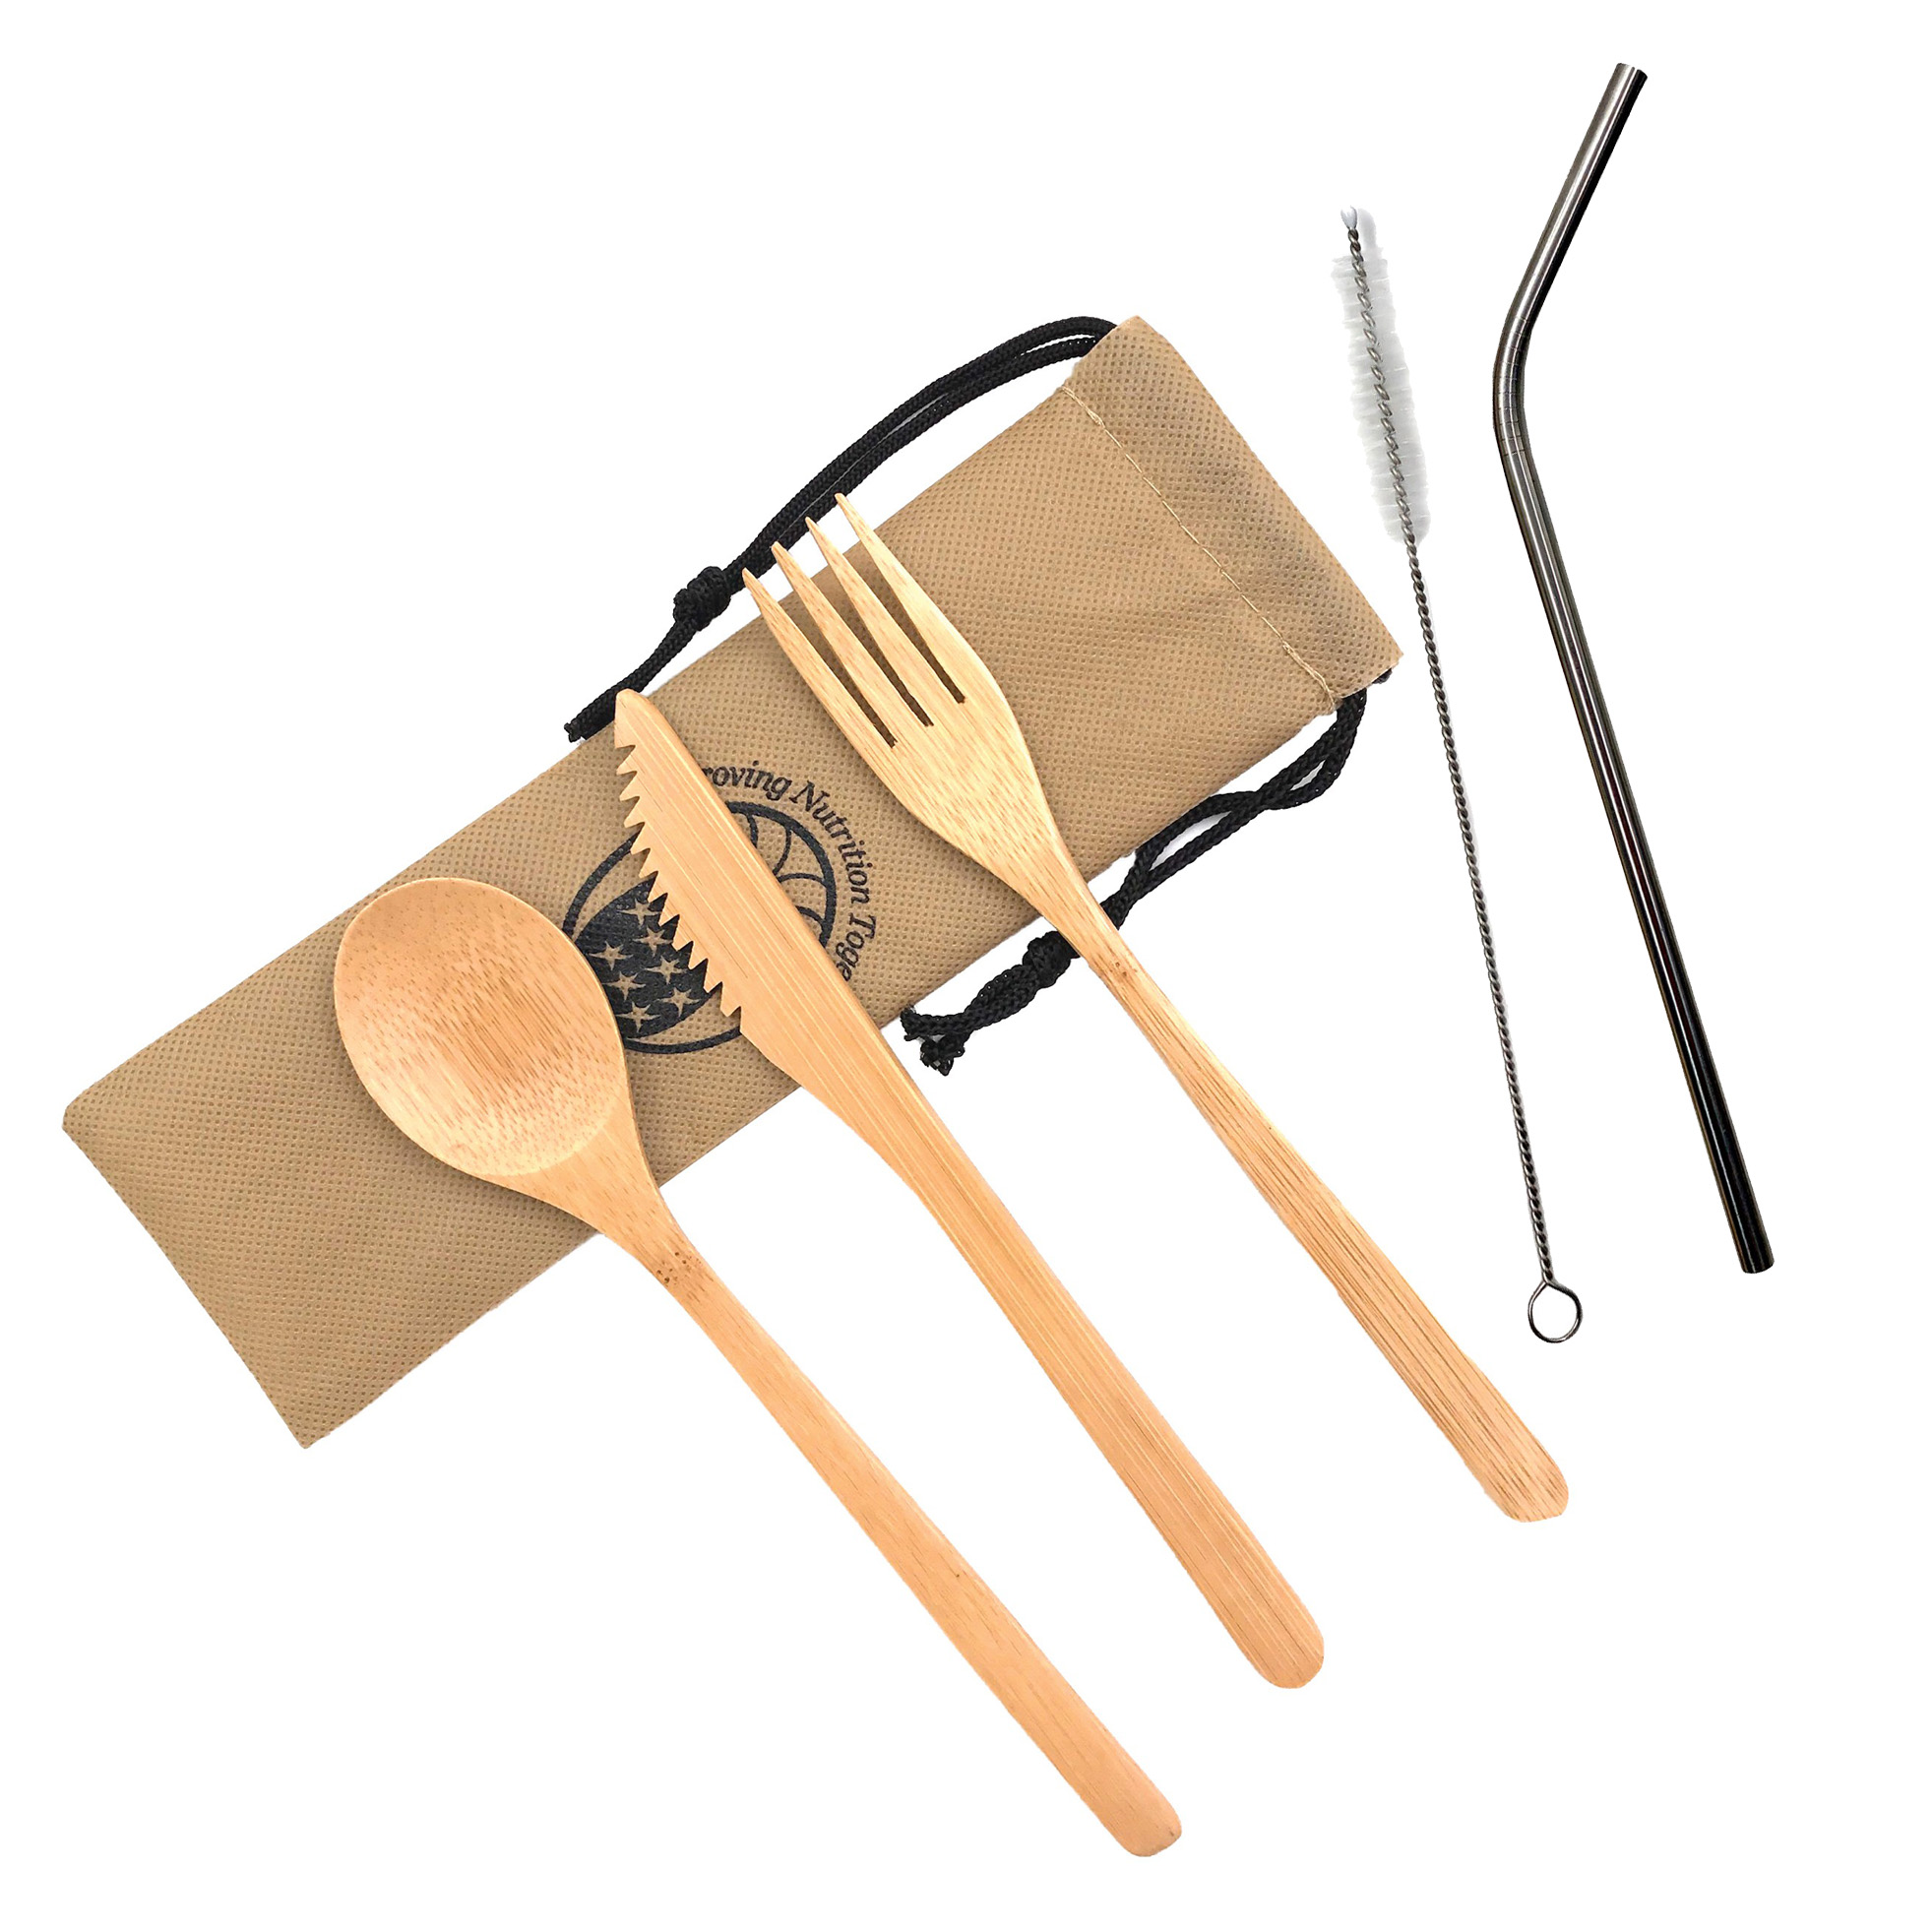 Bamboo Utensils | Bent Stainless Straw | Cleaning Brush | Custom Pouch